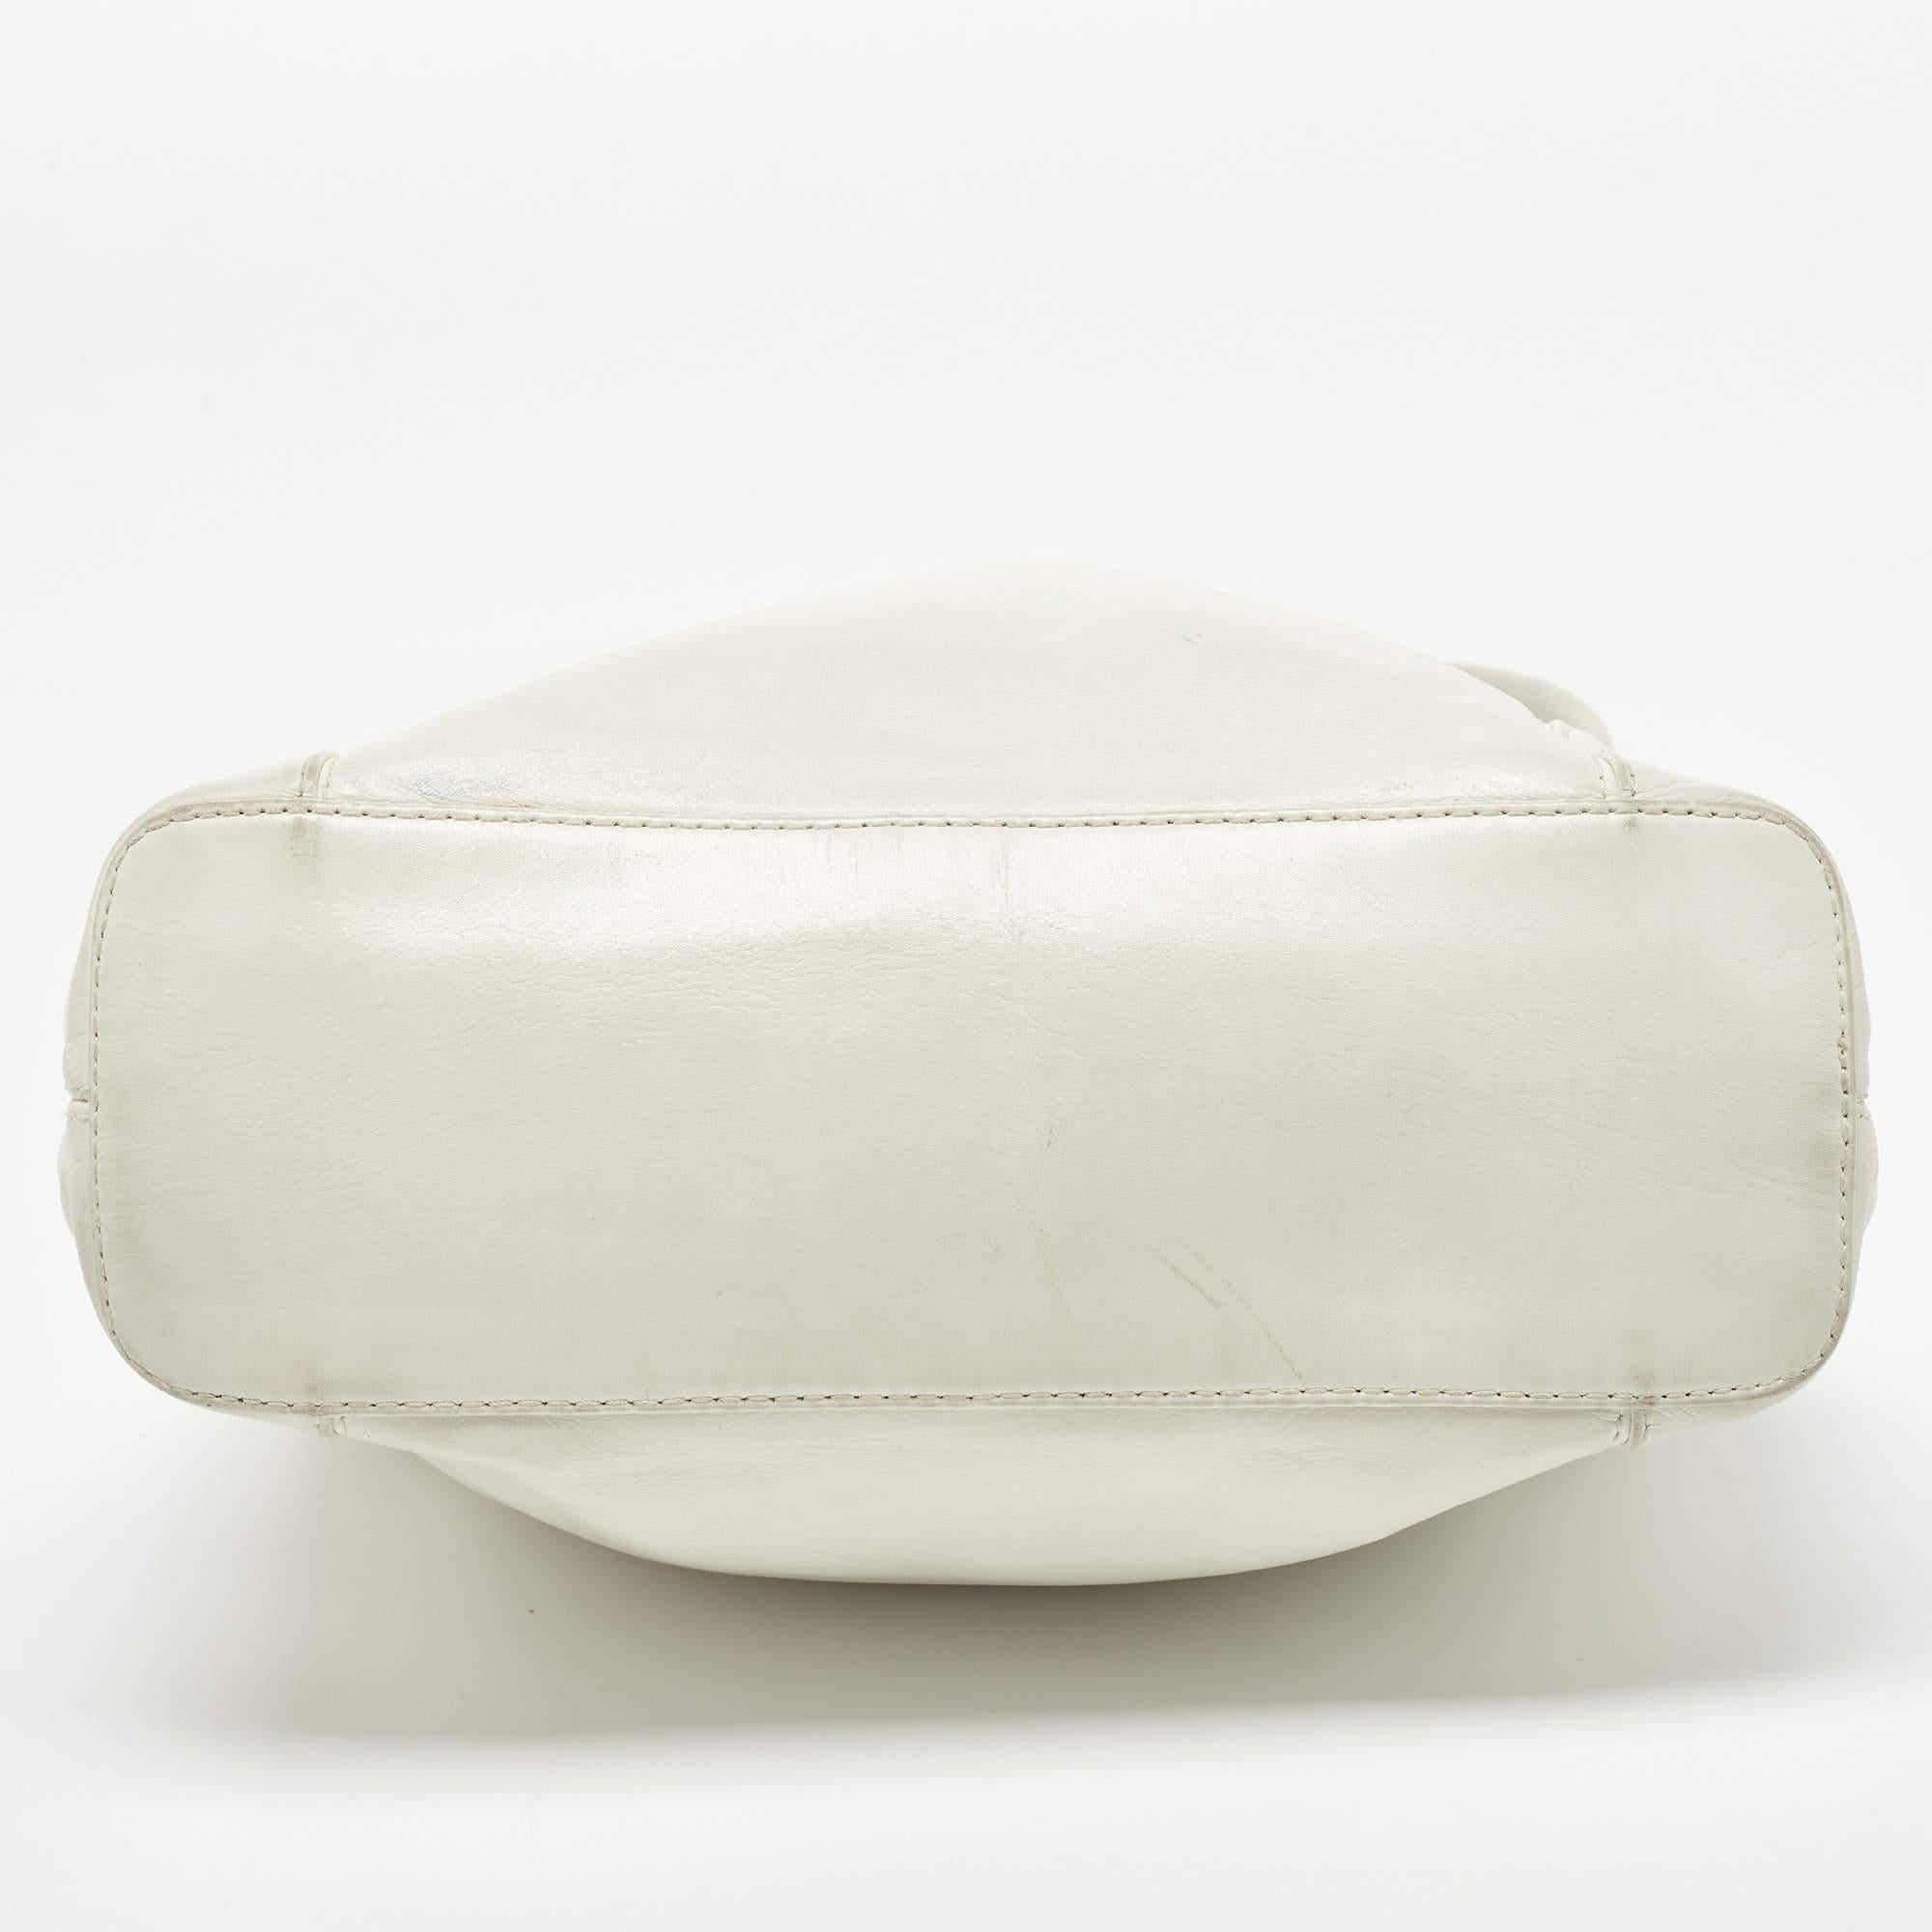 Chanel White Leather Vintage CC Tassel Bag 1